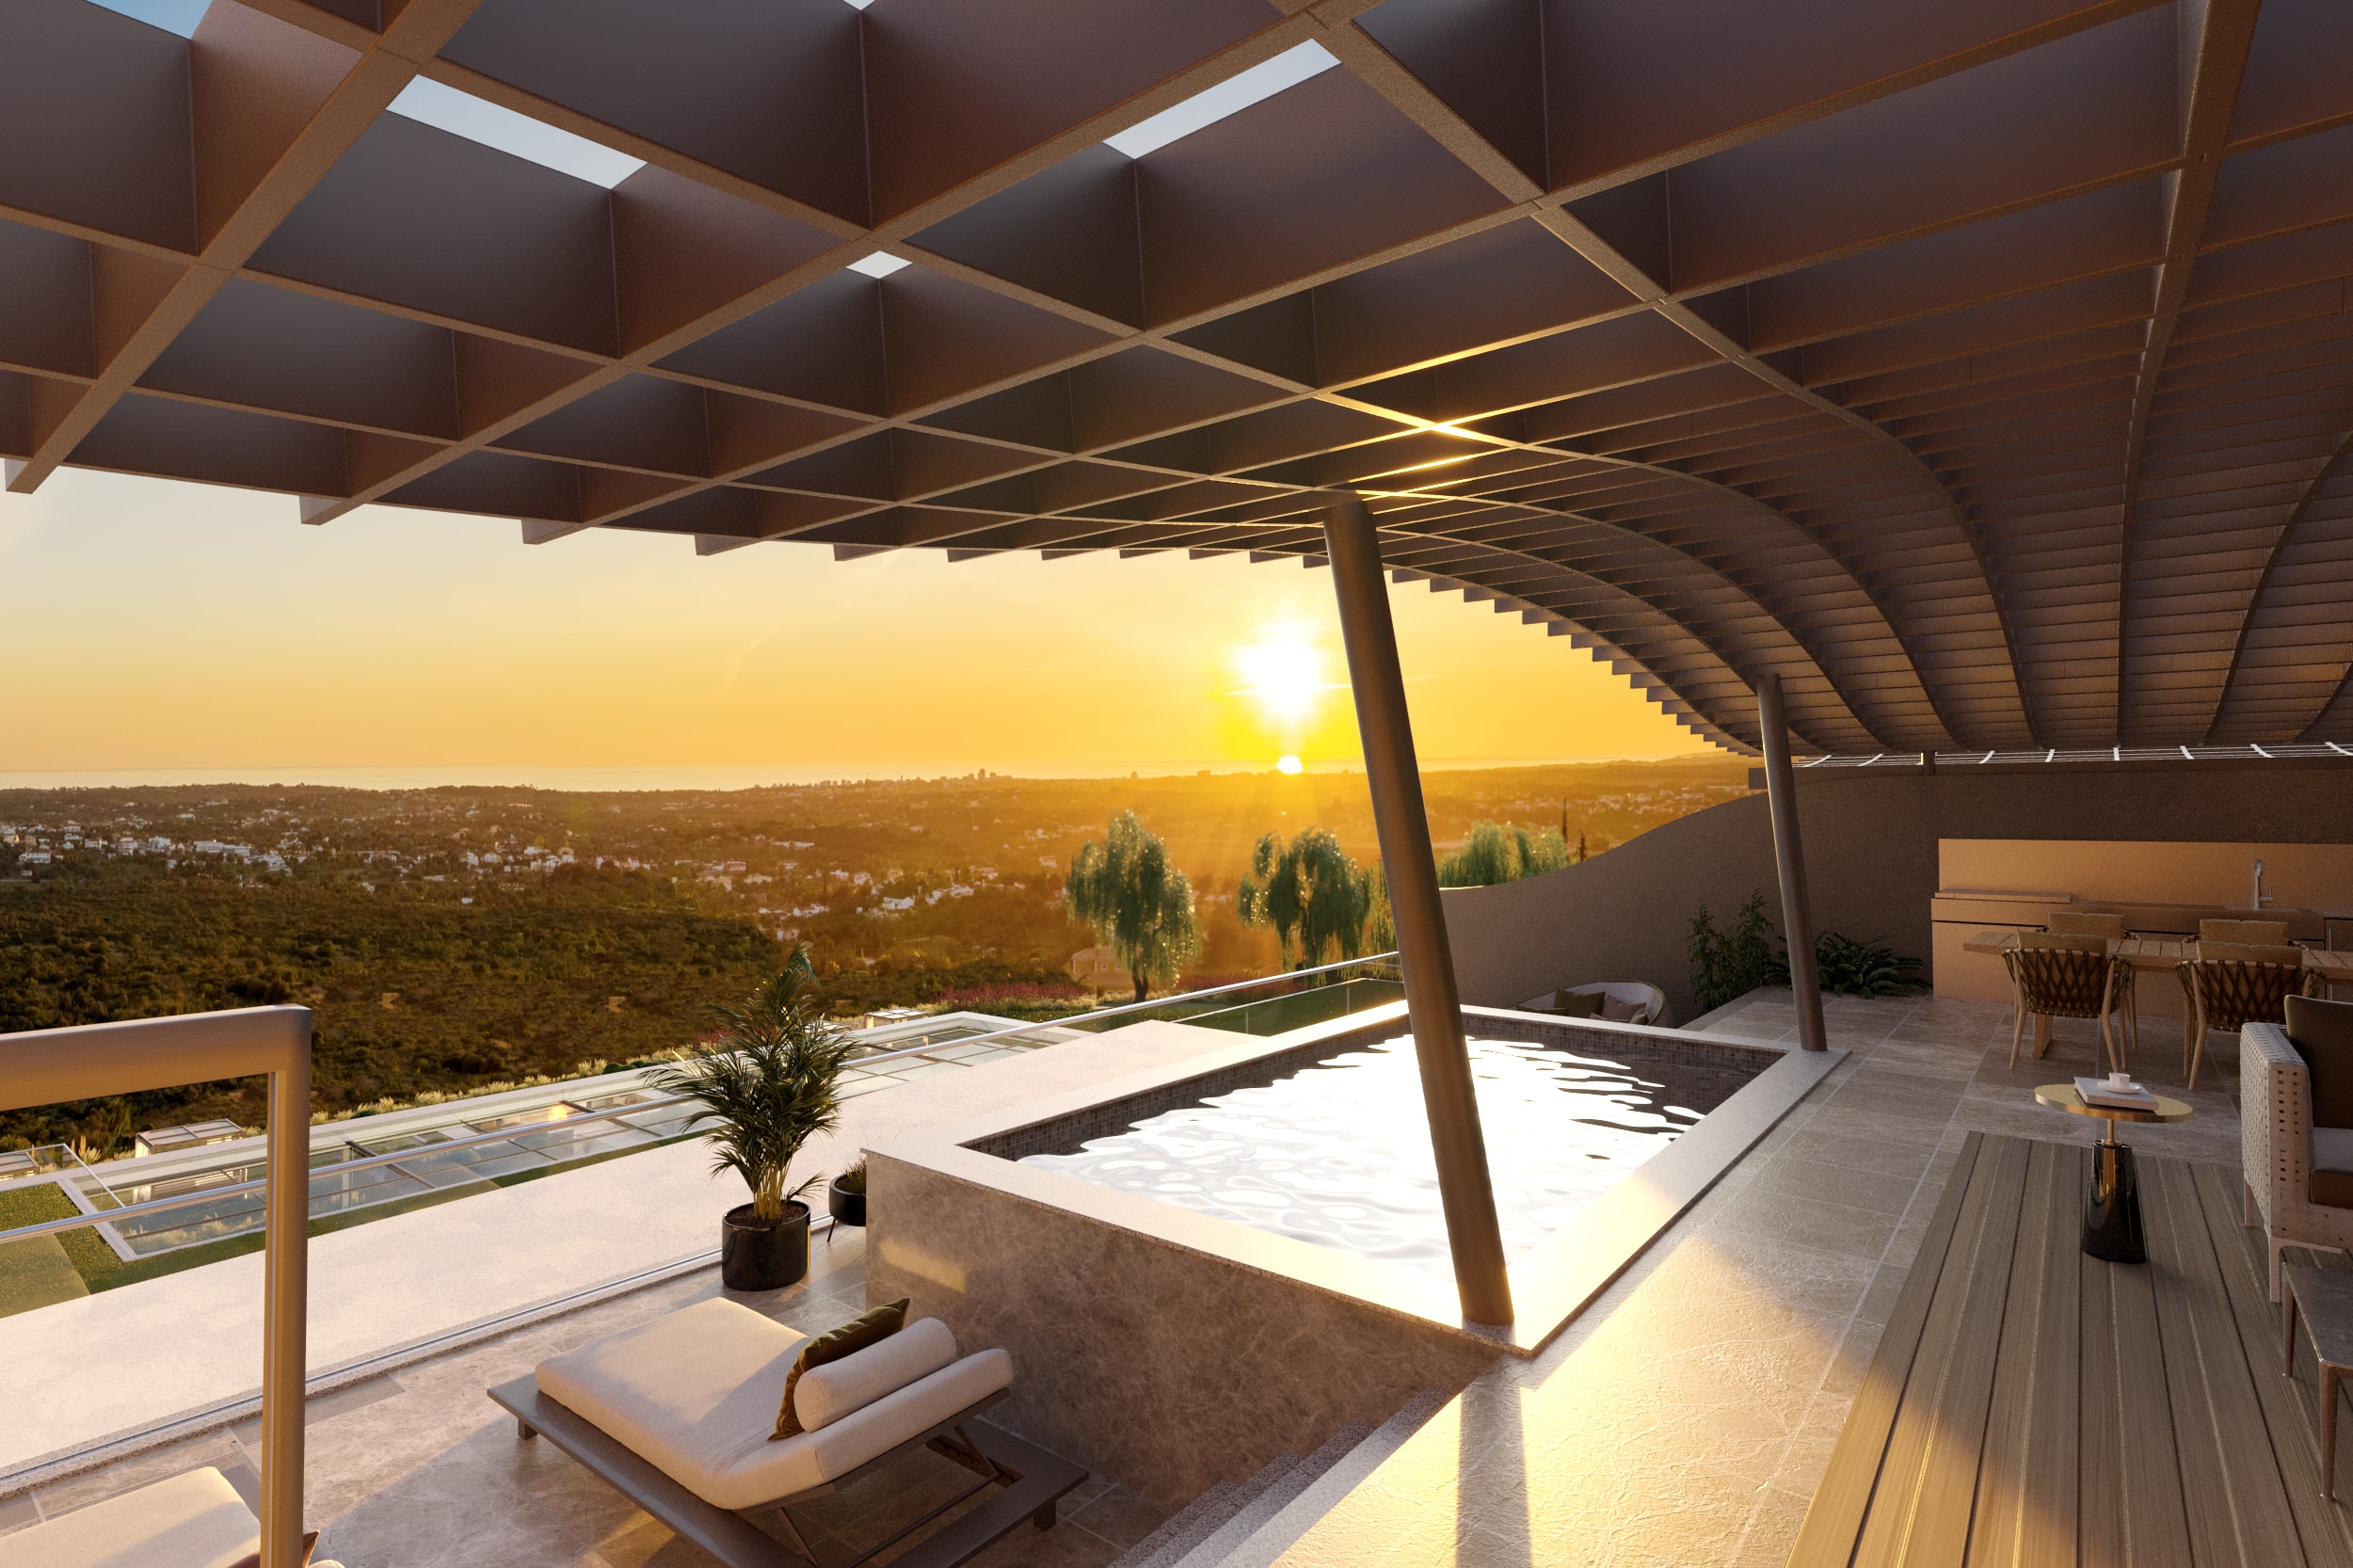 //vpva.pt/wp-content/uploads/2021/12/vpva.pt-3d-render-archviz-architecture-project-design-architecture-golden-visa-hillside-pool-terrace.jpg